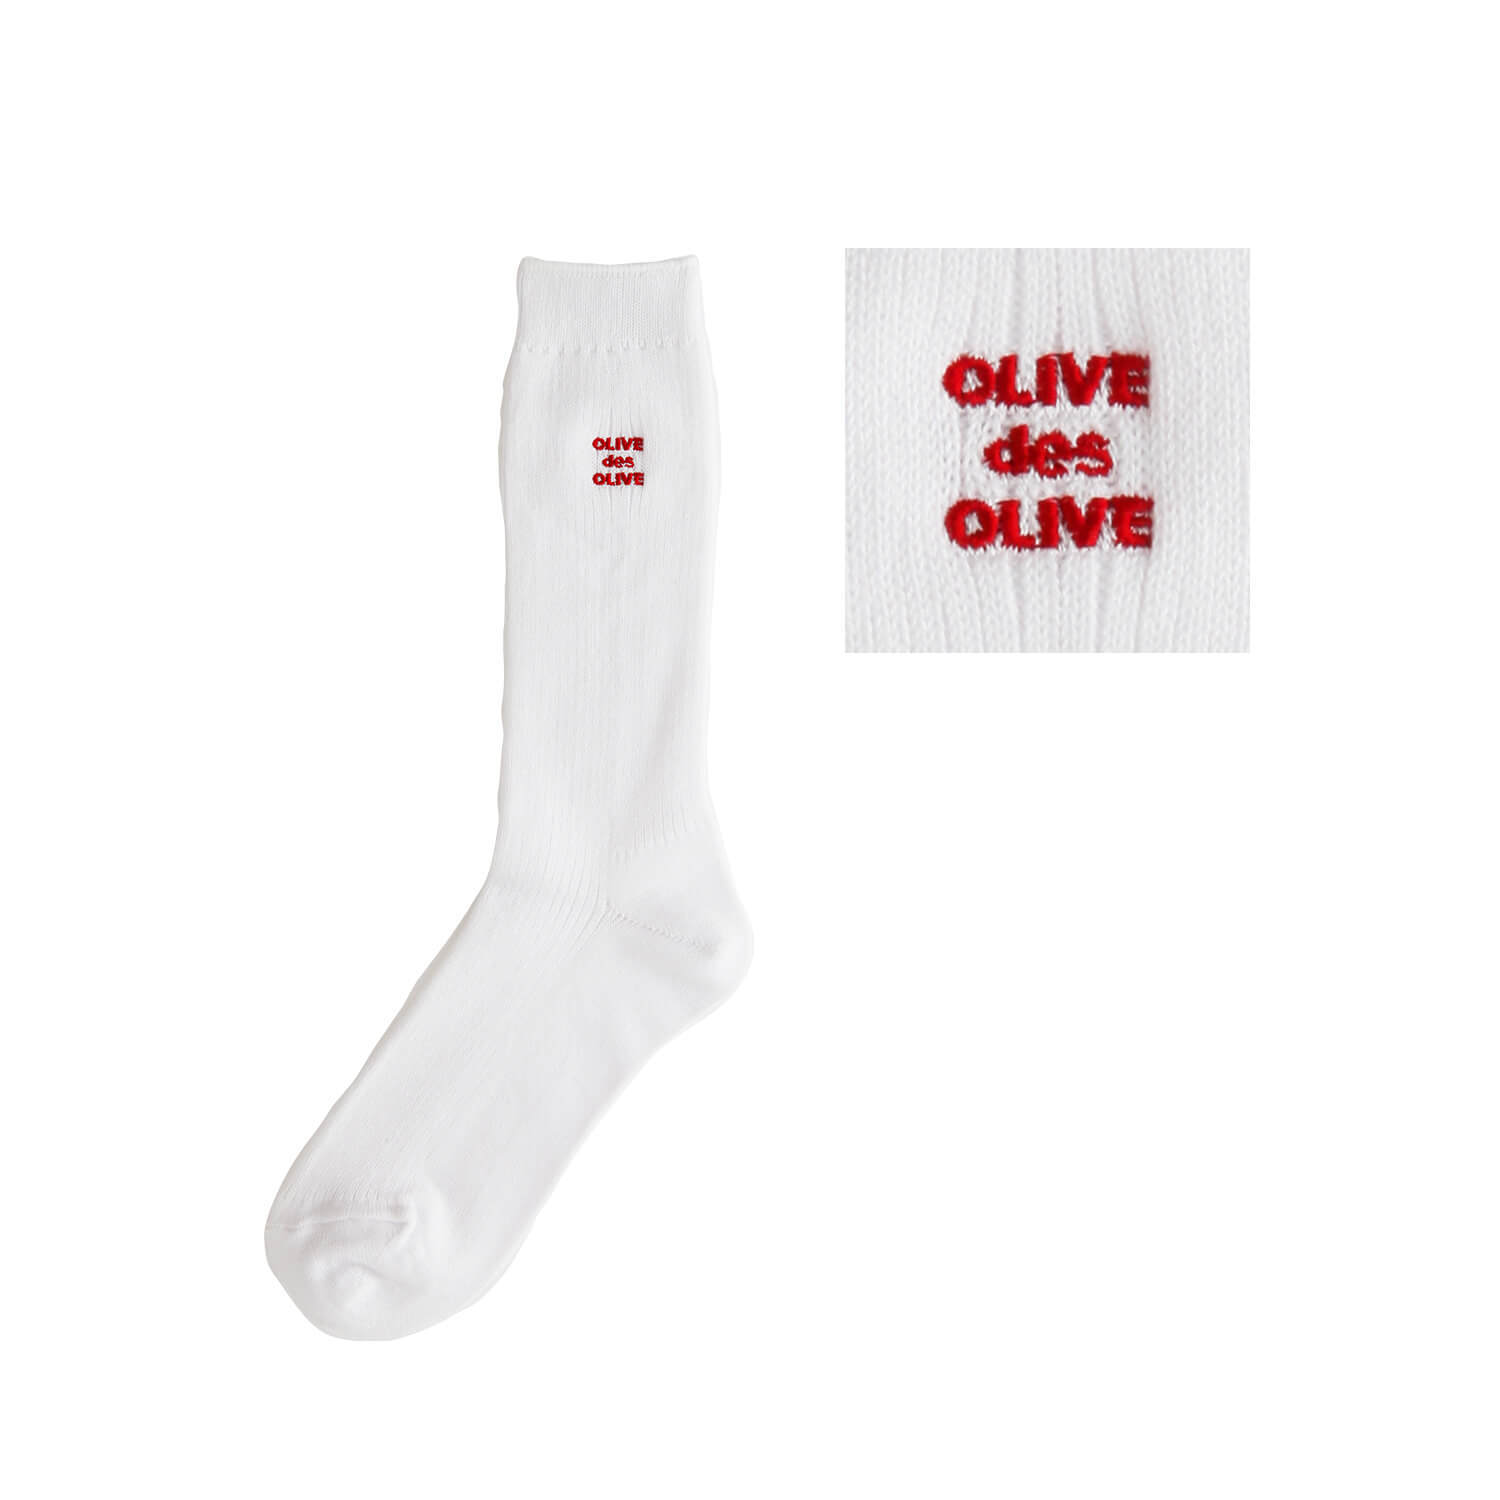 OLIVE des OLIVEのポップなロゴ刺繍入りの白ソックス。刺繍カラー-15赤